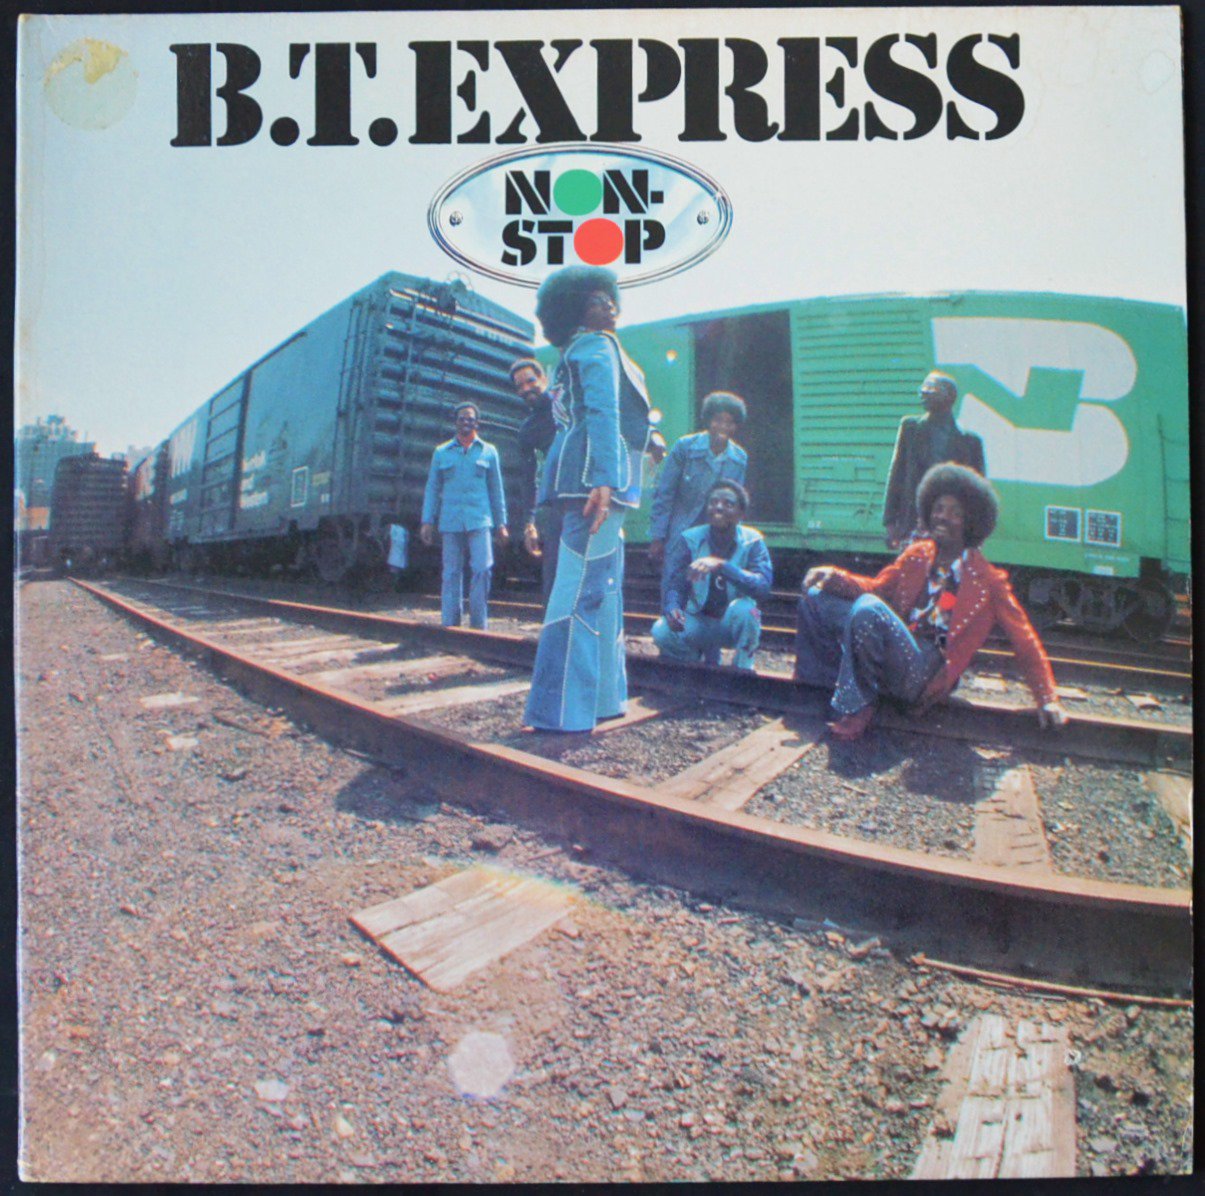 B.T. EXPRESS / NON-STOP (LP)